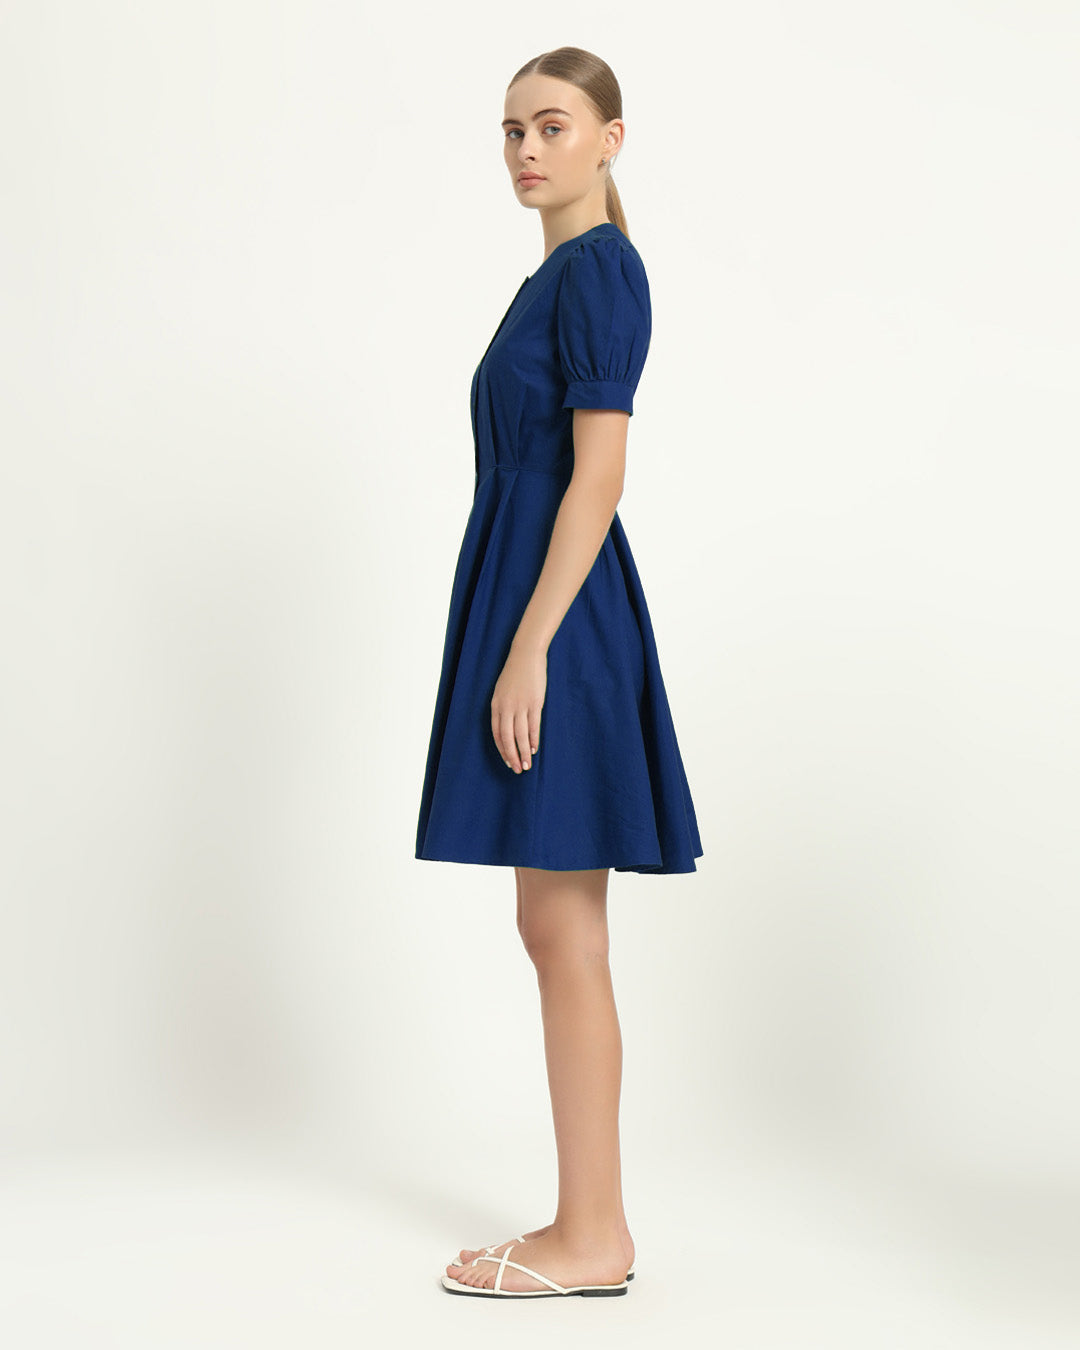 The Kittsee Cobalt Cotton Dress